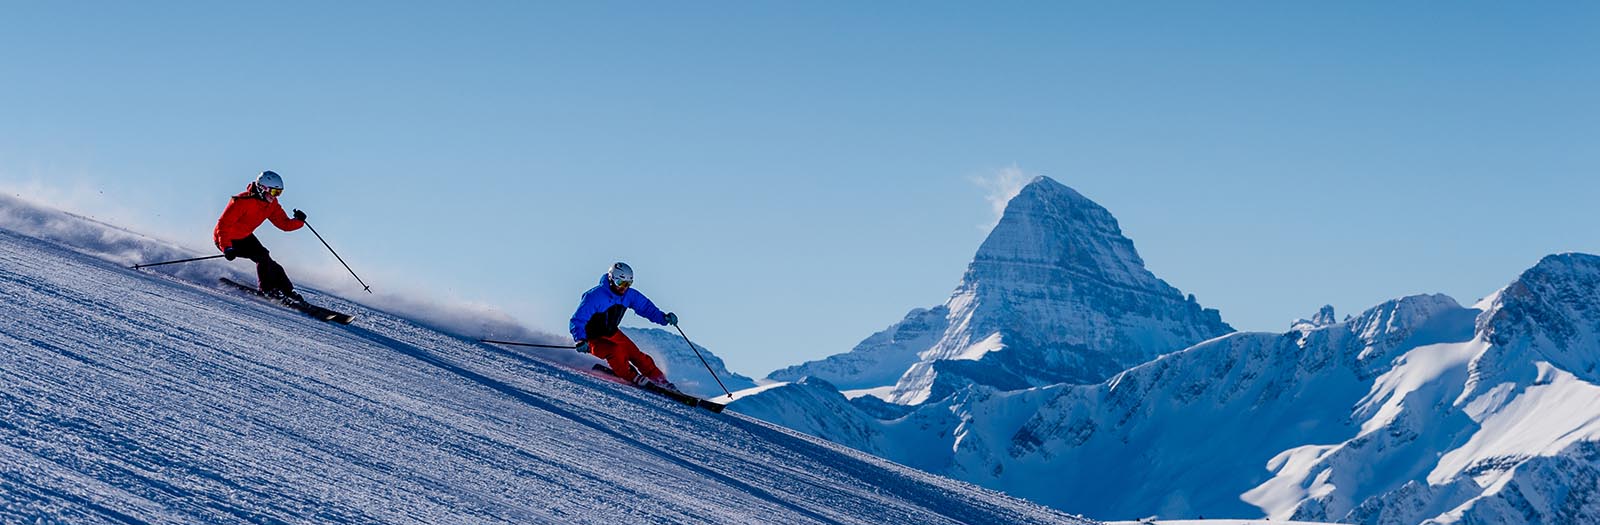 canadian ski vacations, ski resorts in canada, alberta ski resorts